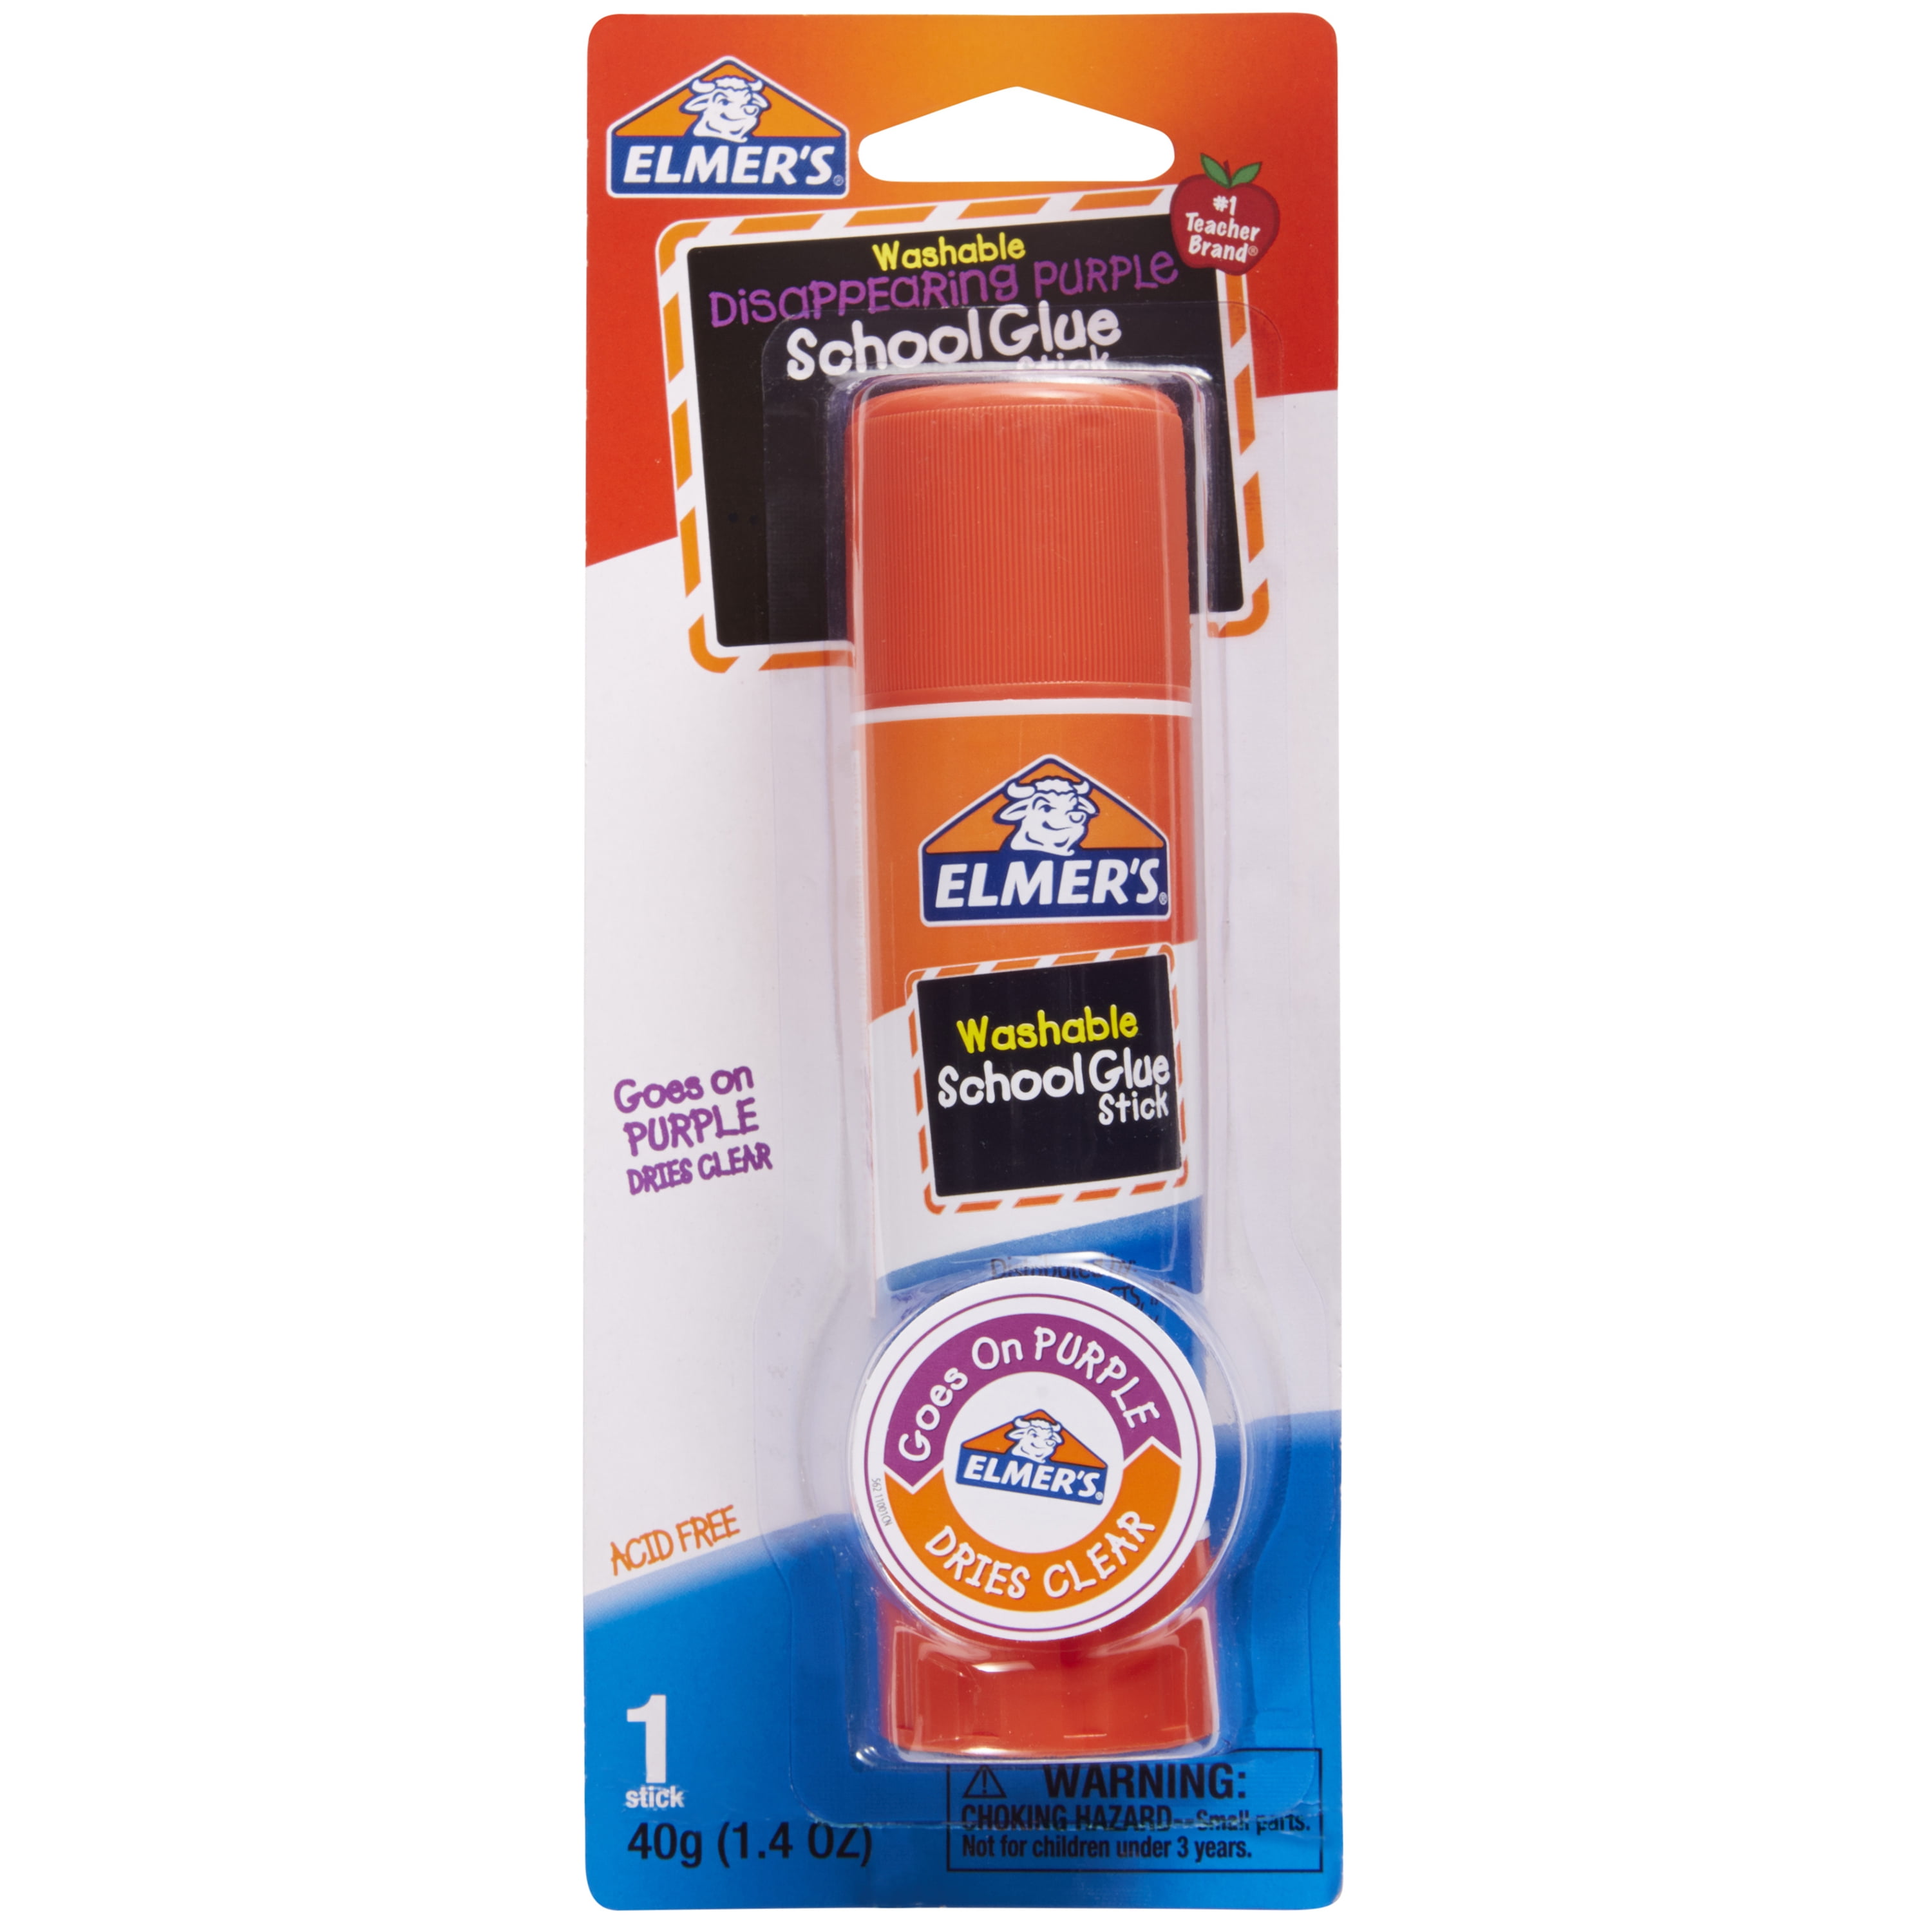  EPO61669  Elmer's Disappearing Purple School Glue Sticks - 40 g  per Stick - 12 Pack